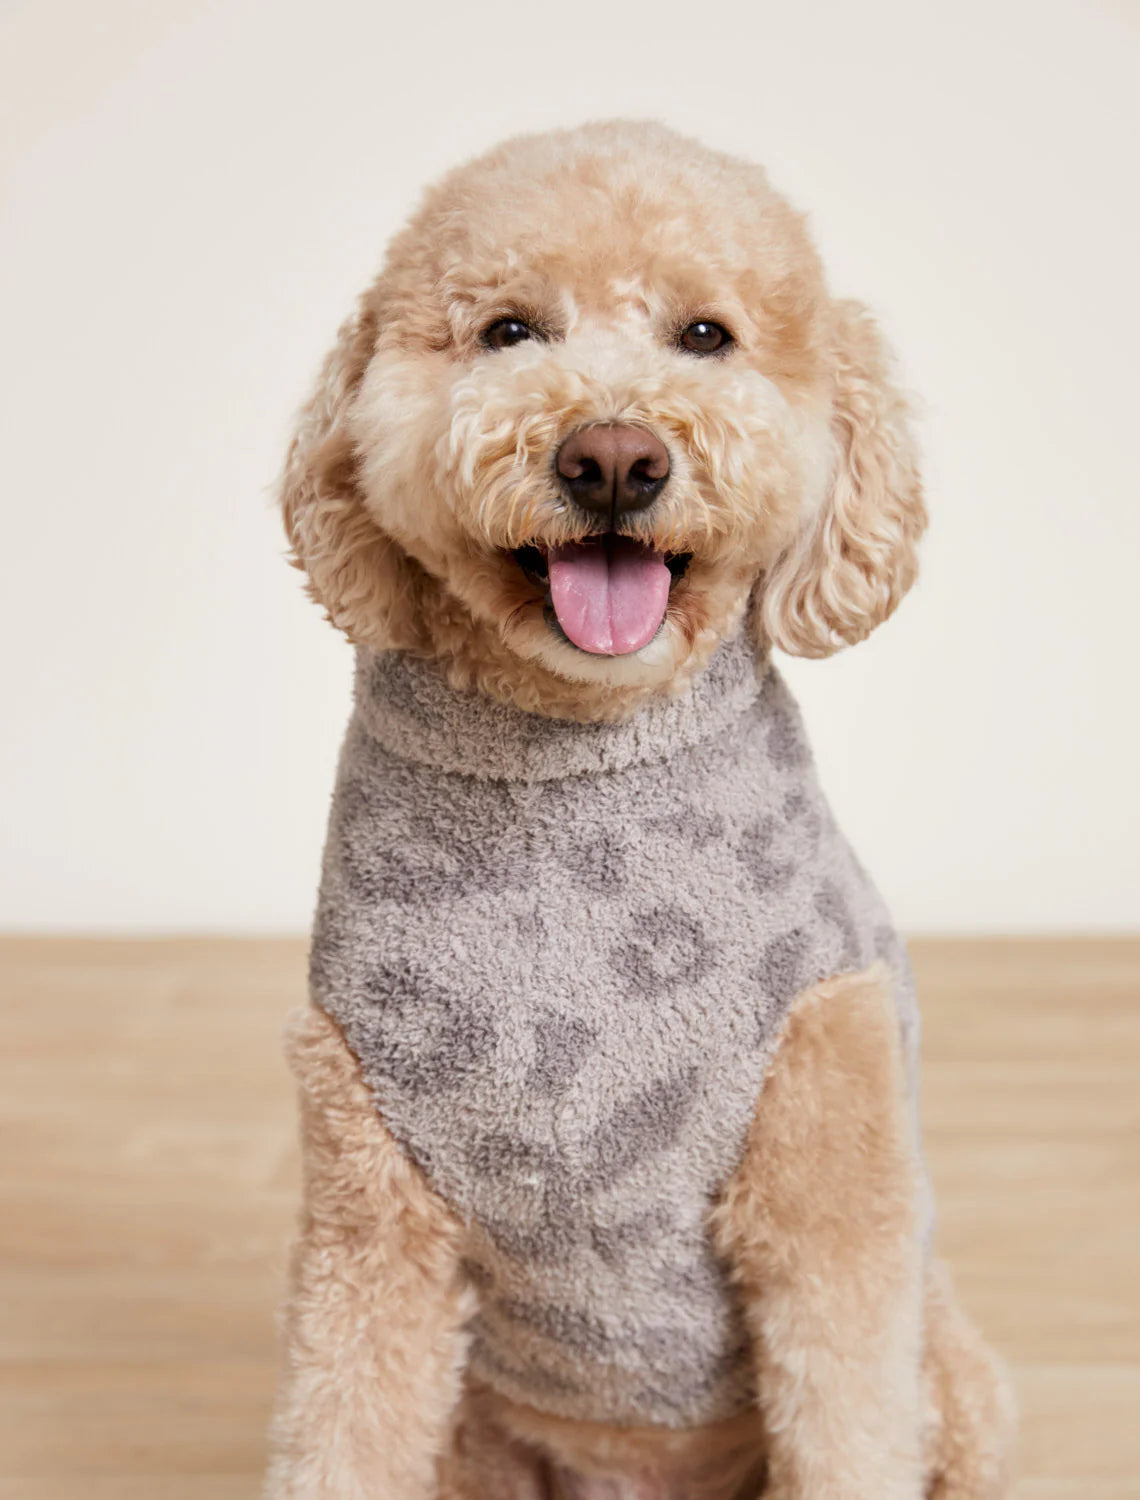 Barefoot Dreams - CozyChic Cheetah Dog Sweater